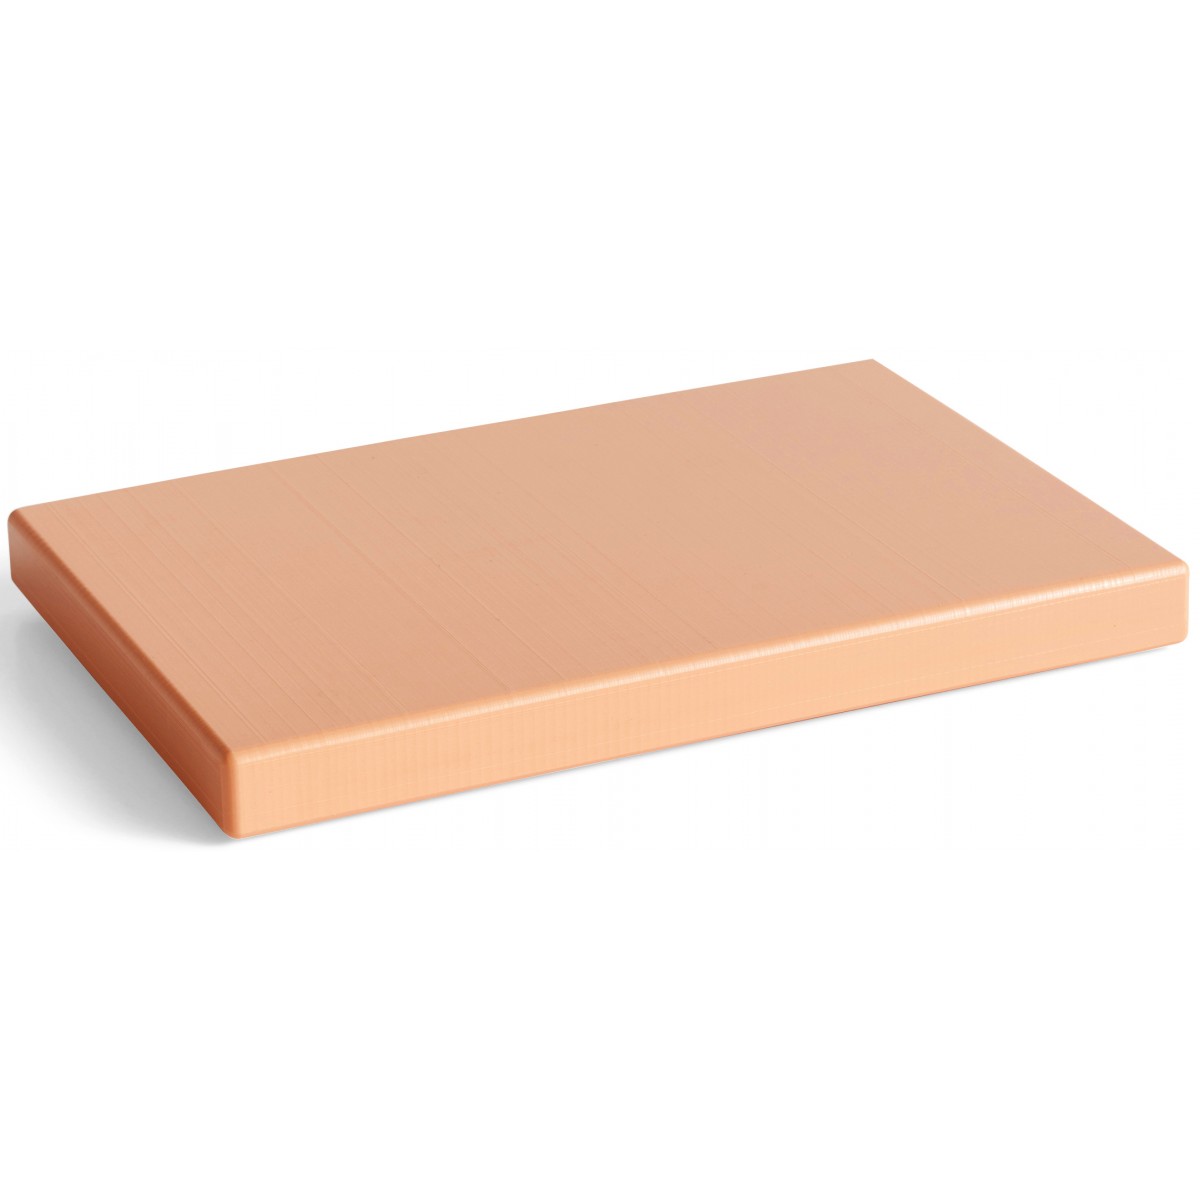 SOLD OUT peach - rectangular chopping board